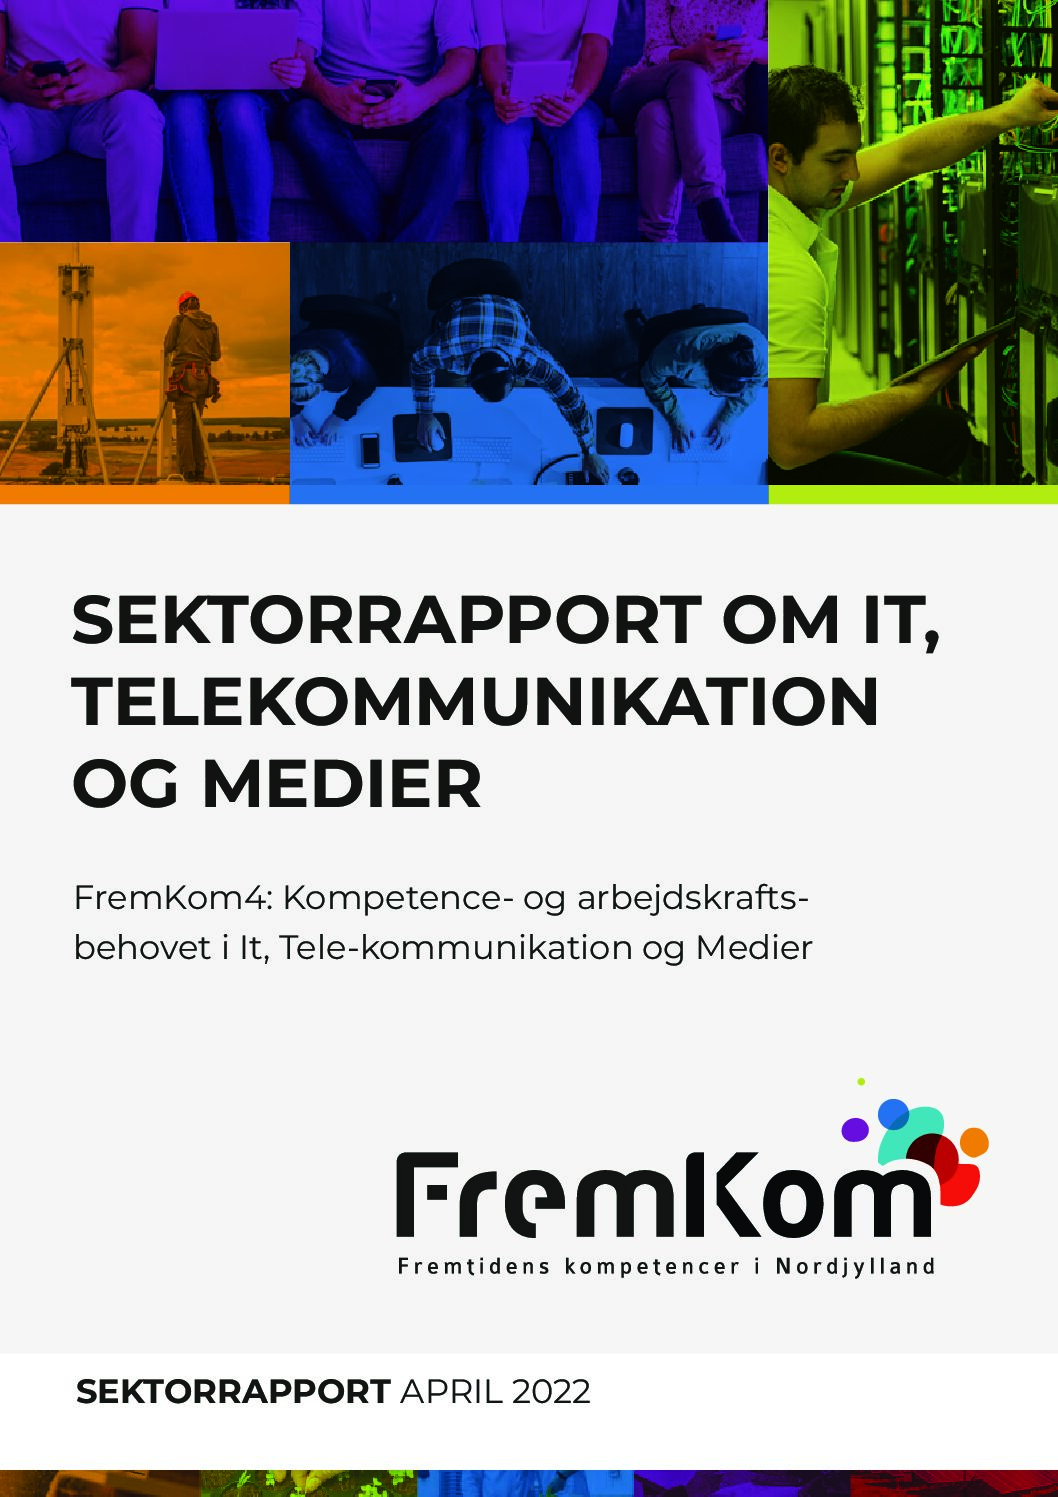 FremKom4 – IT, telekommunikation & medier